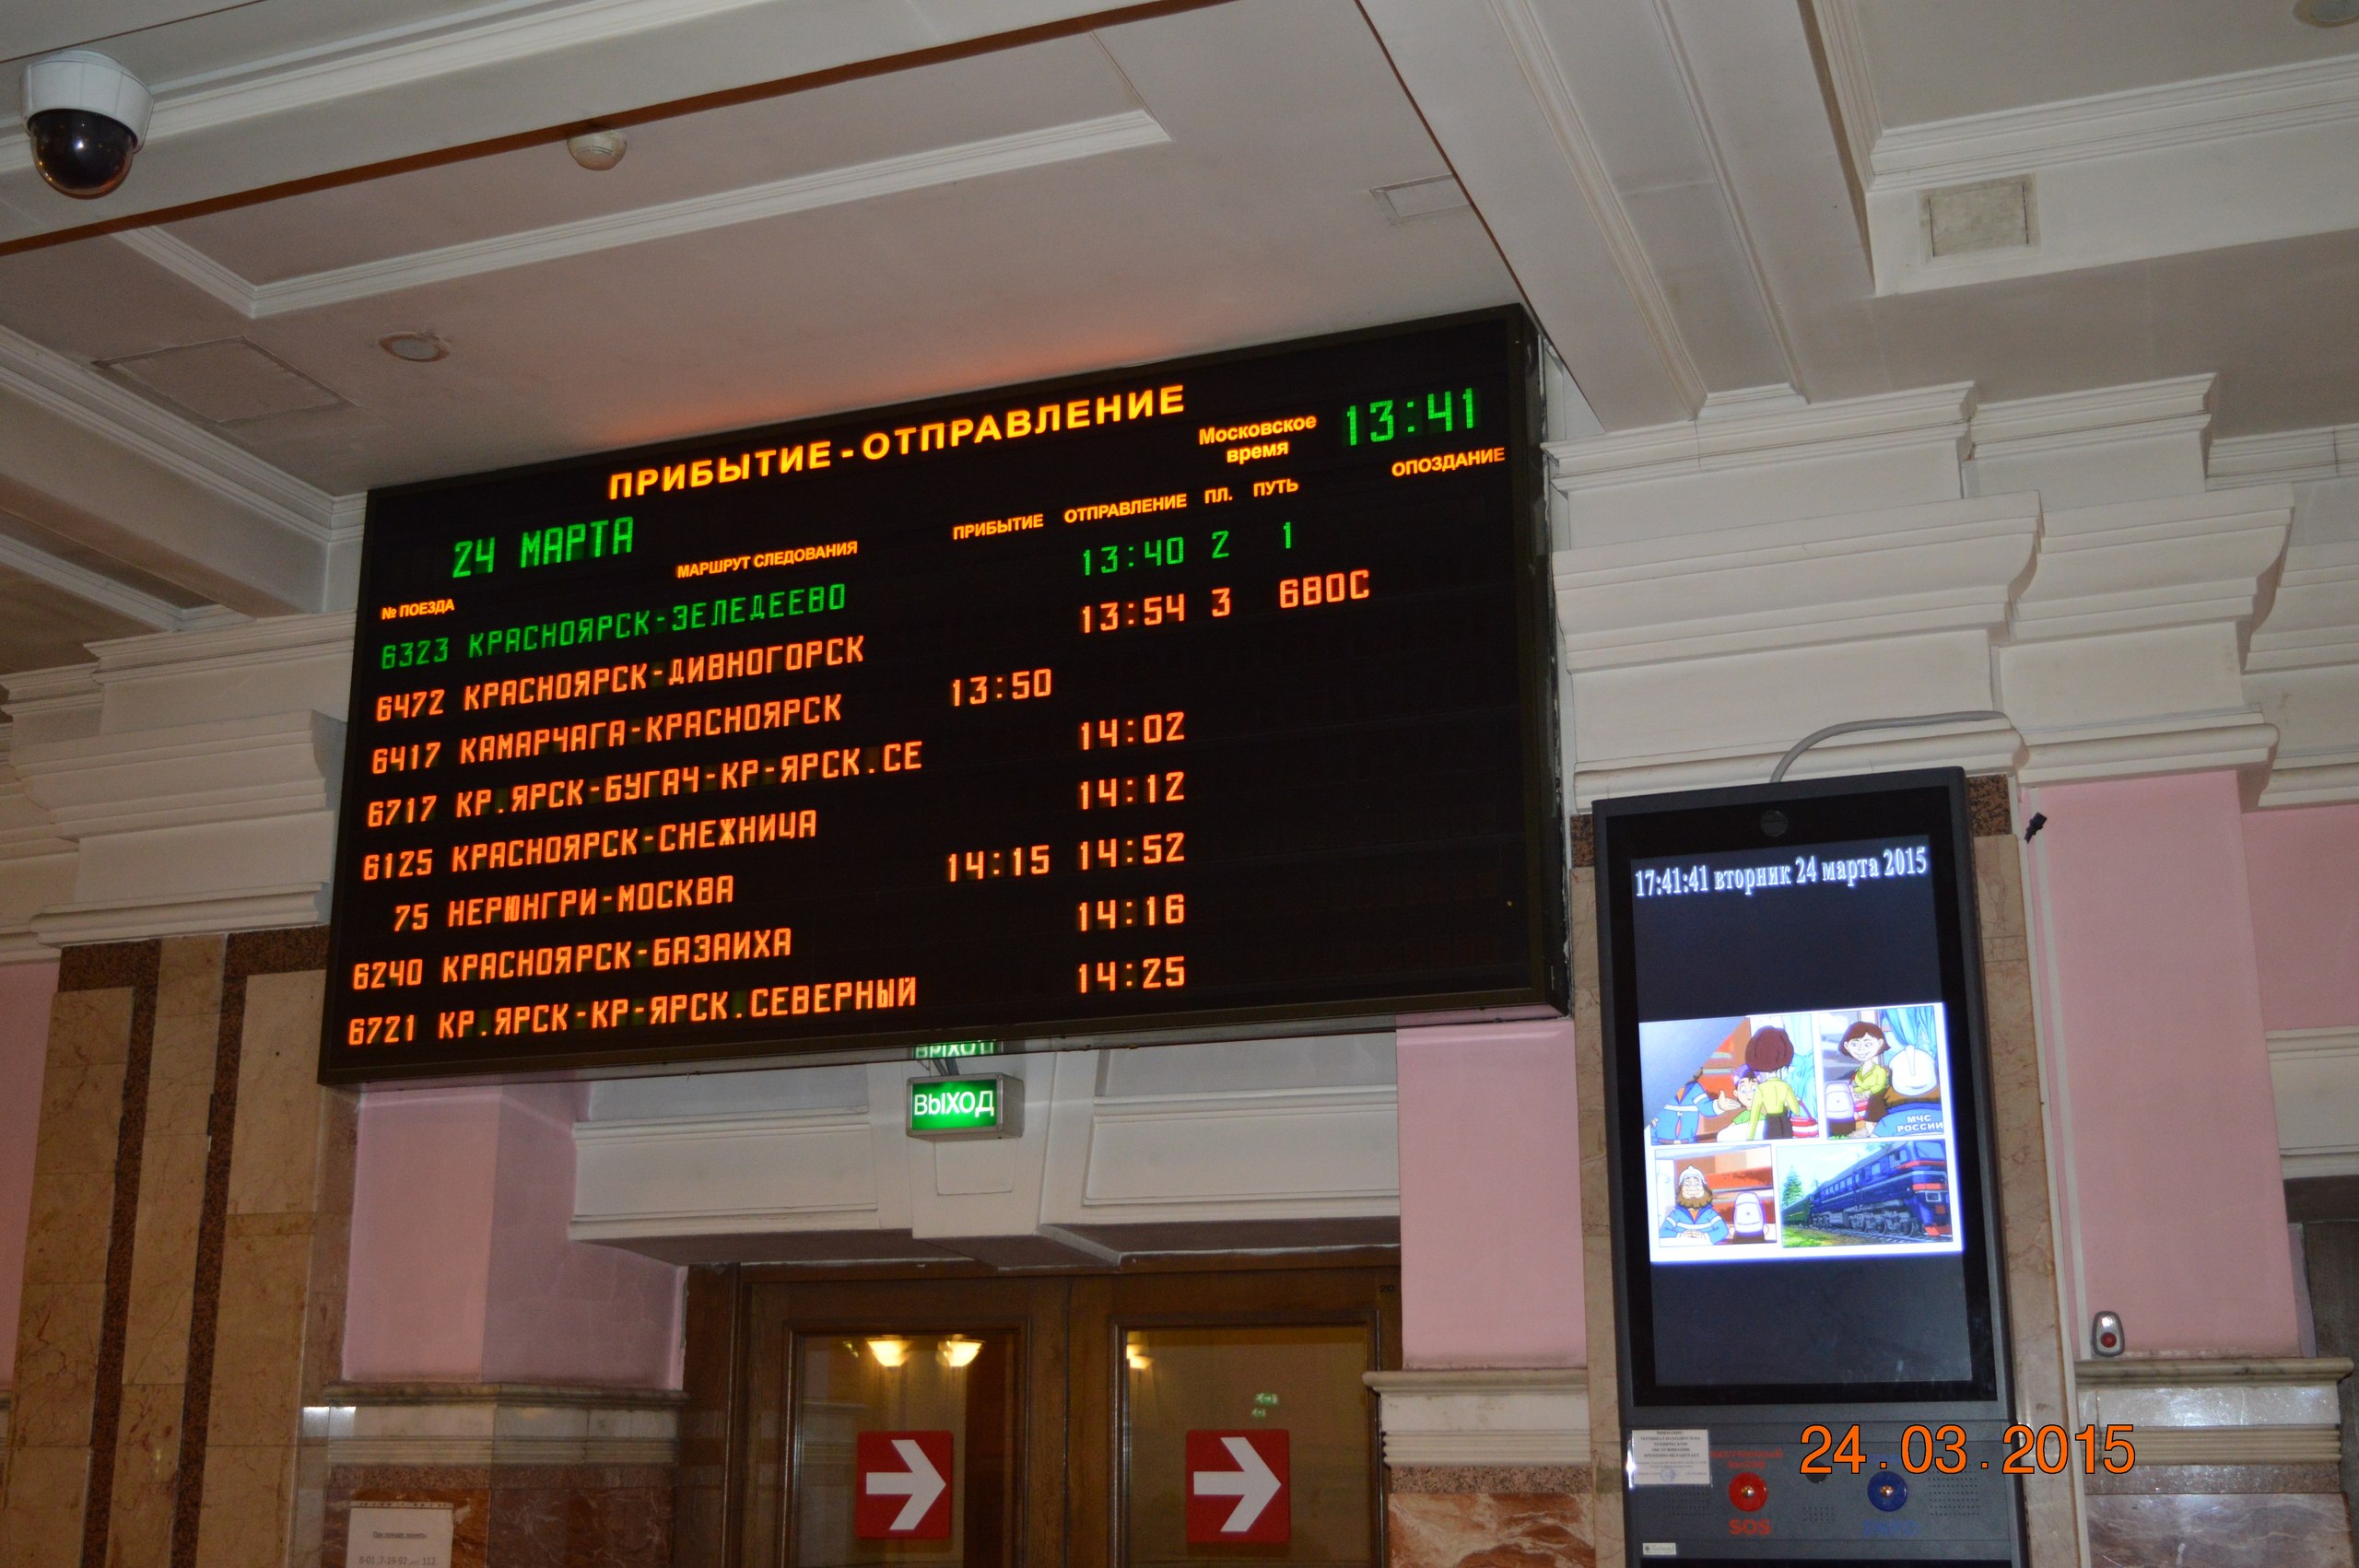 Табло приезда. Вокзал Красноярск табло. Табло на ЖД вокзале. Табло прибытия поездов. Табло железнодорожного вокзала.